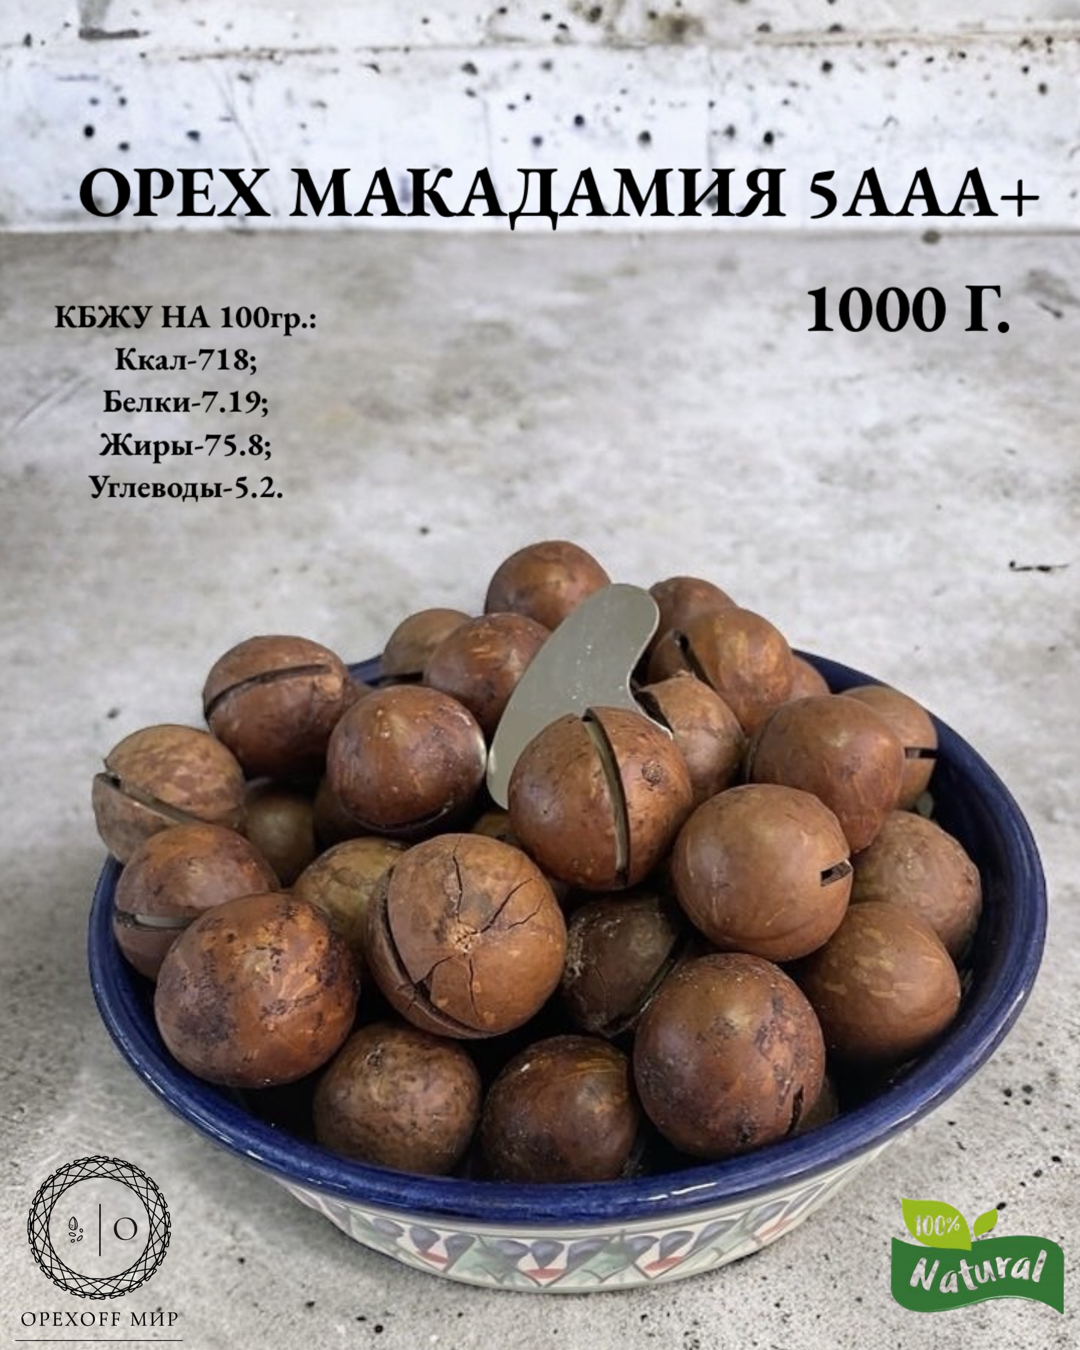 Орех Макадамия-5+AAA, самый крупный размер,1 кг!